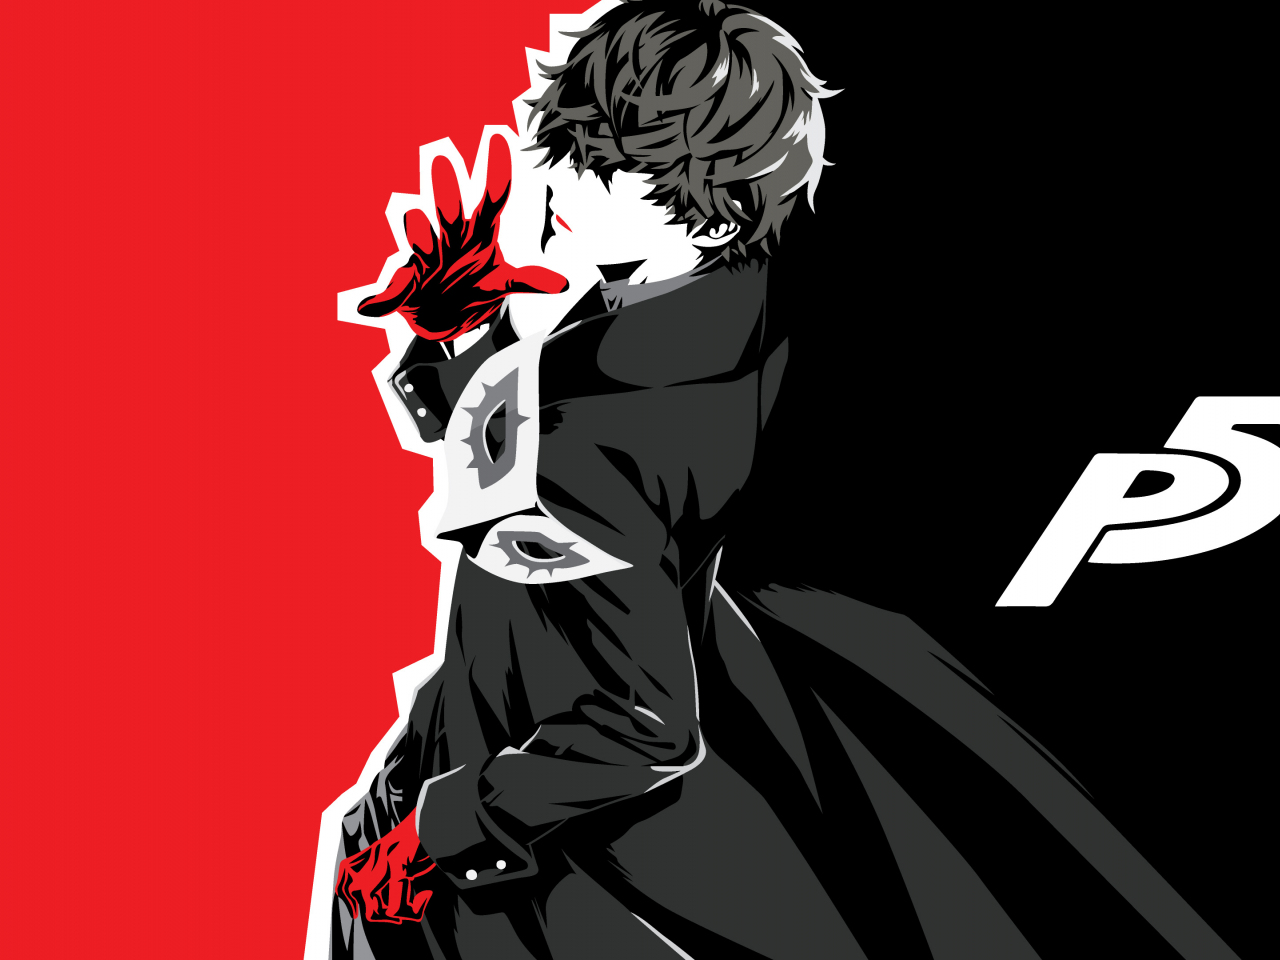 Download Akira Kurusu Protagonist Persona 5 Video Game Anime 1280x960 Wallpaper Standard 4 3 Fullscreen Wallapper 1280x960 Hd Image Background 4069